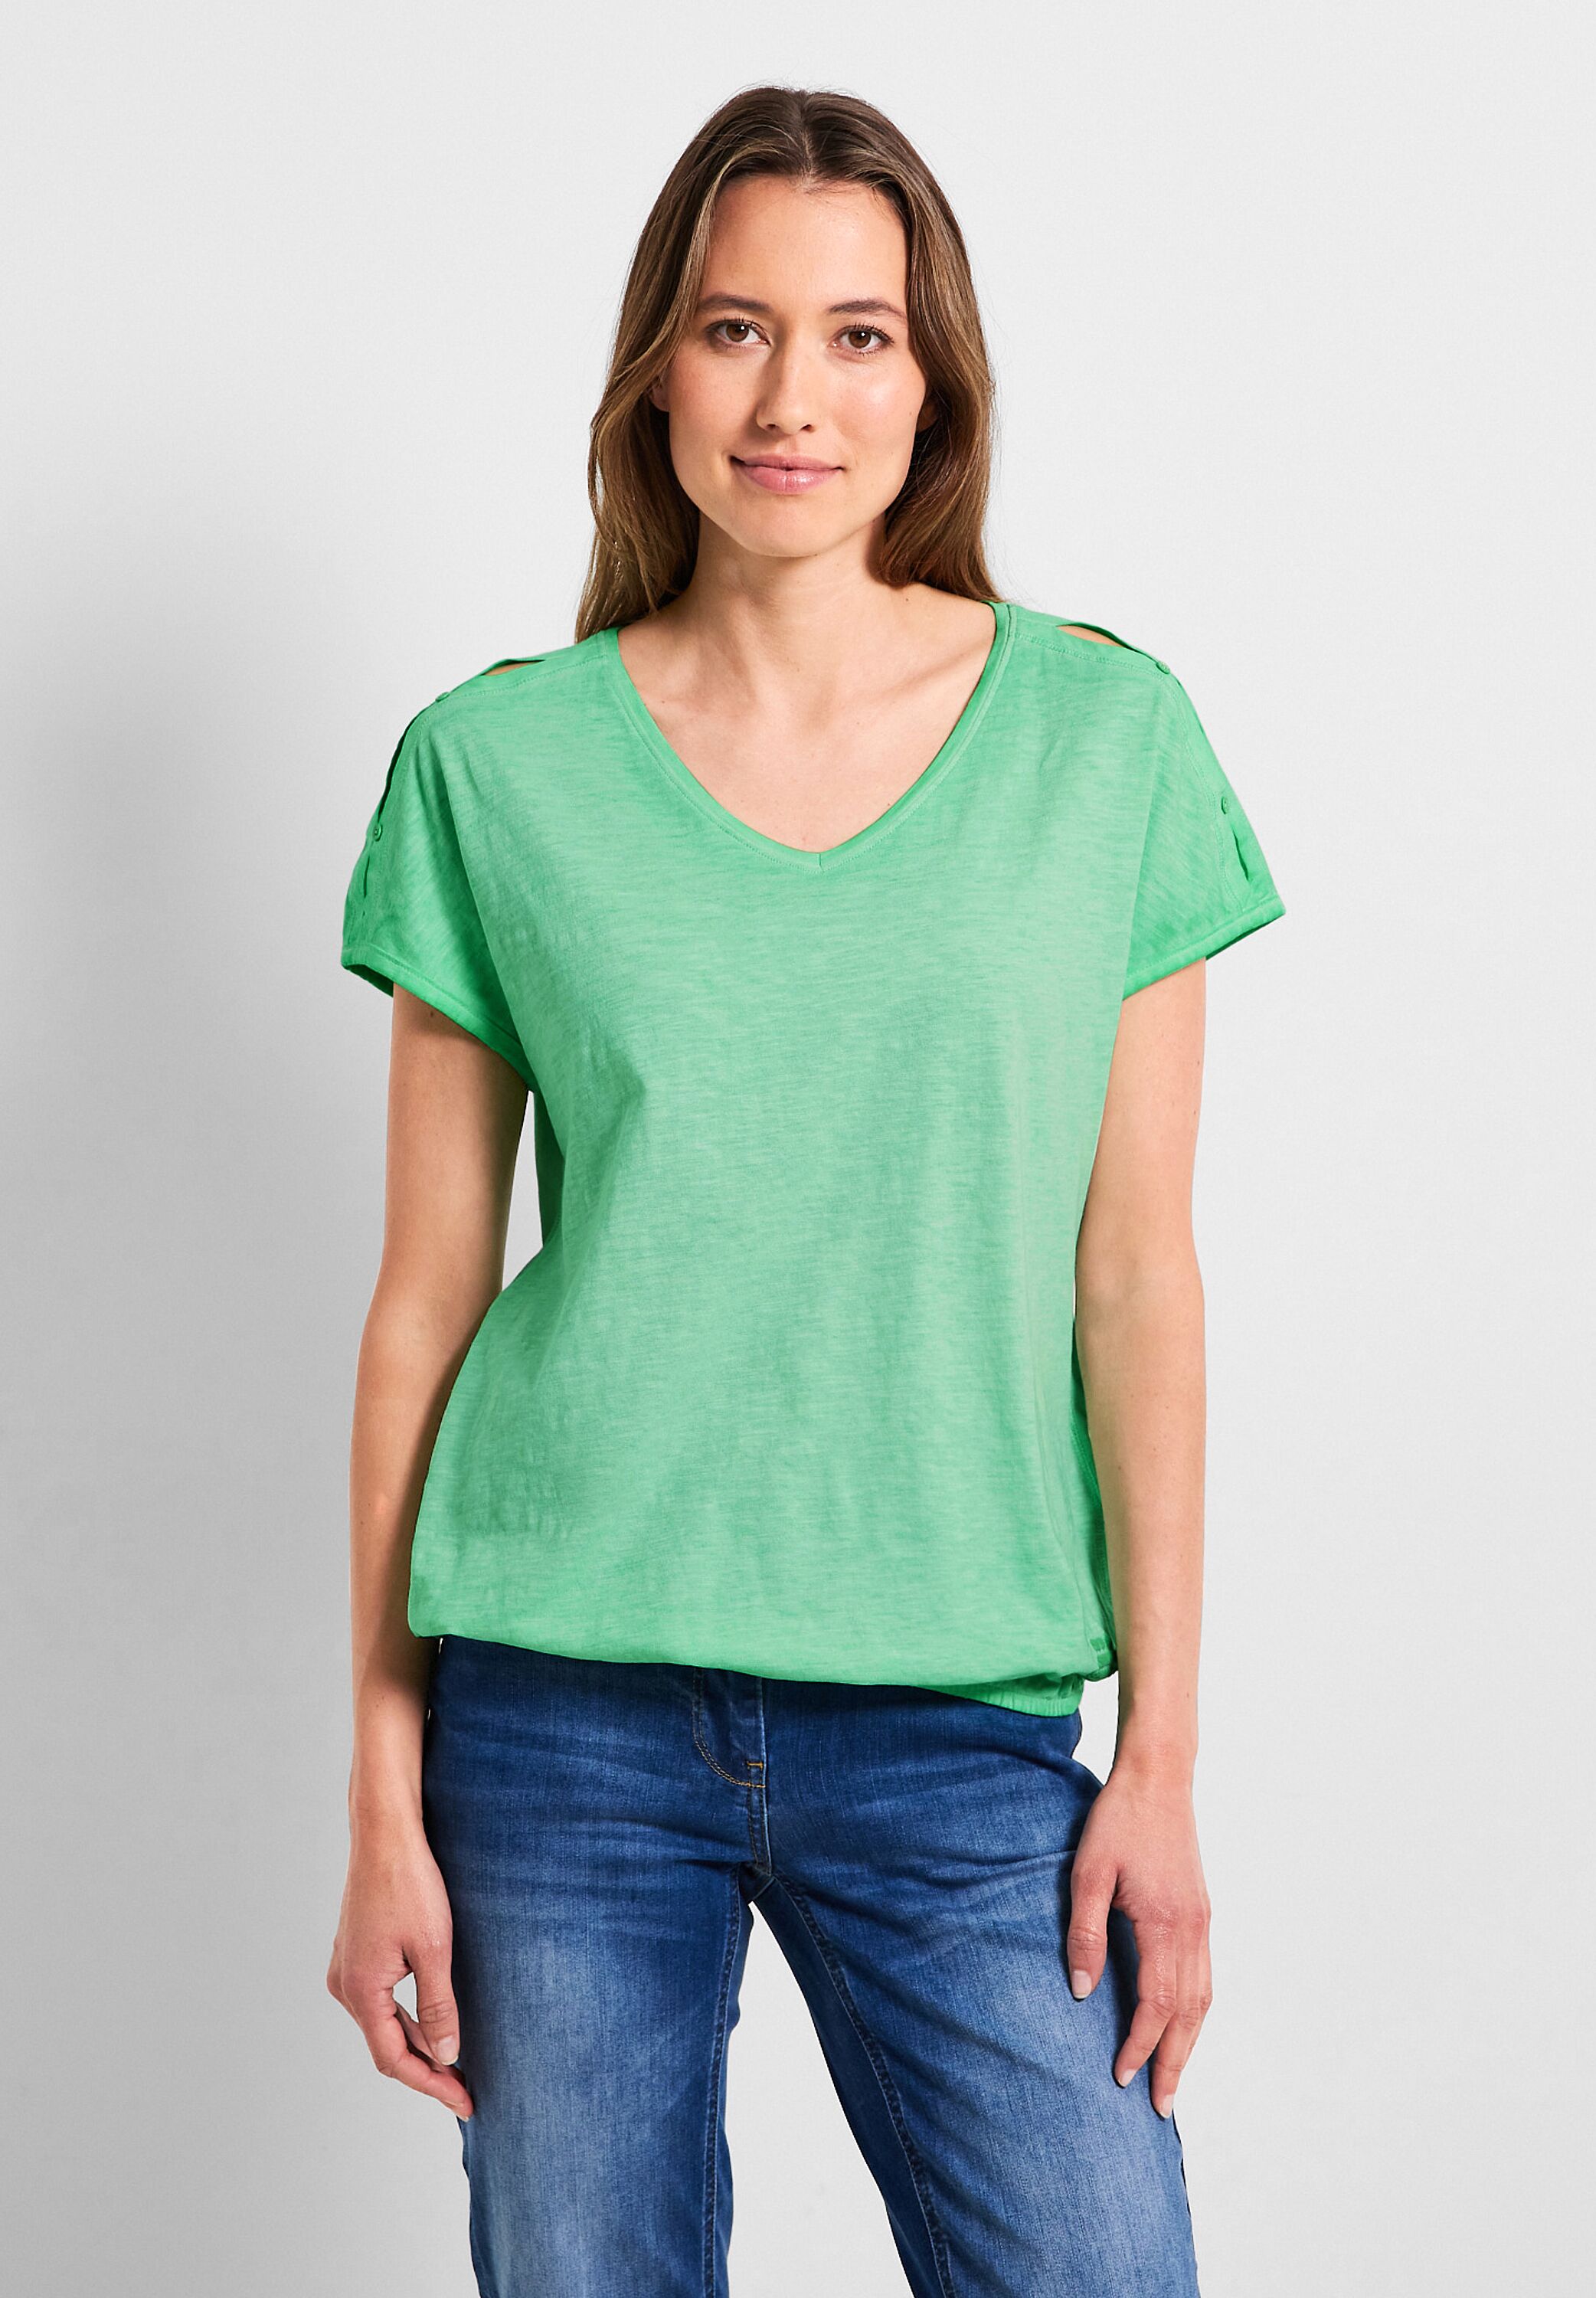 CECIL T-Shirt in Fresh Green im SALE reduziert B320028-14794 - CONCEPT Mode